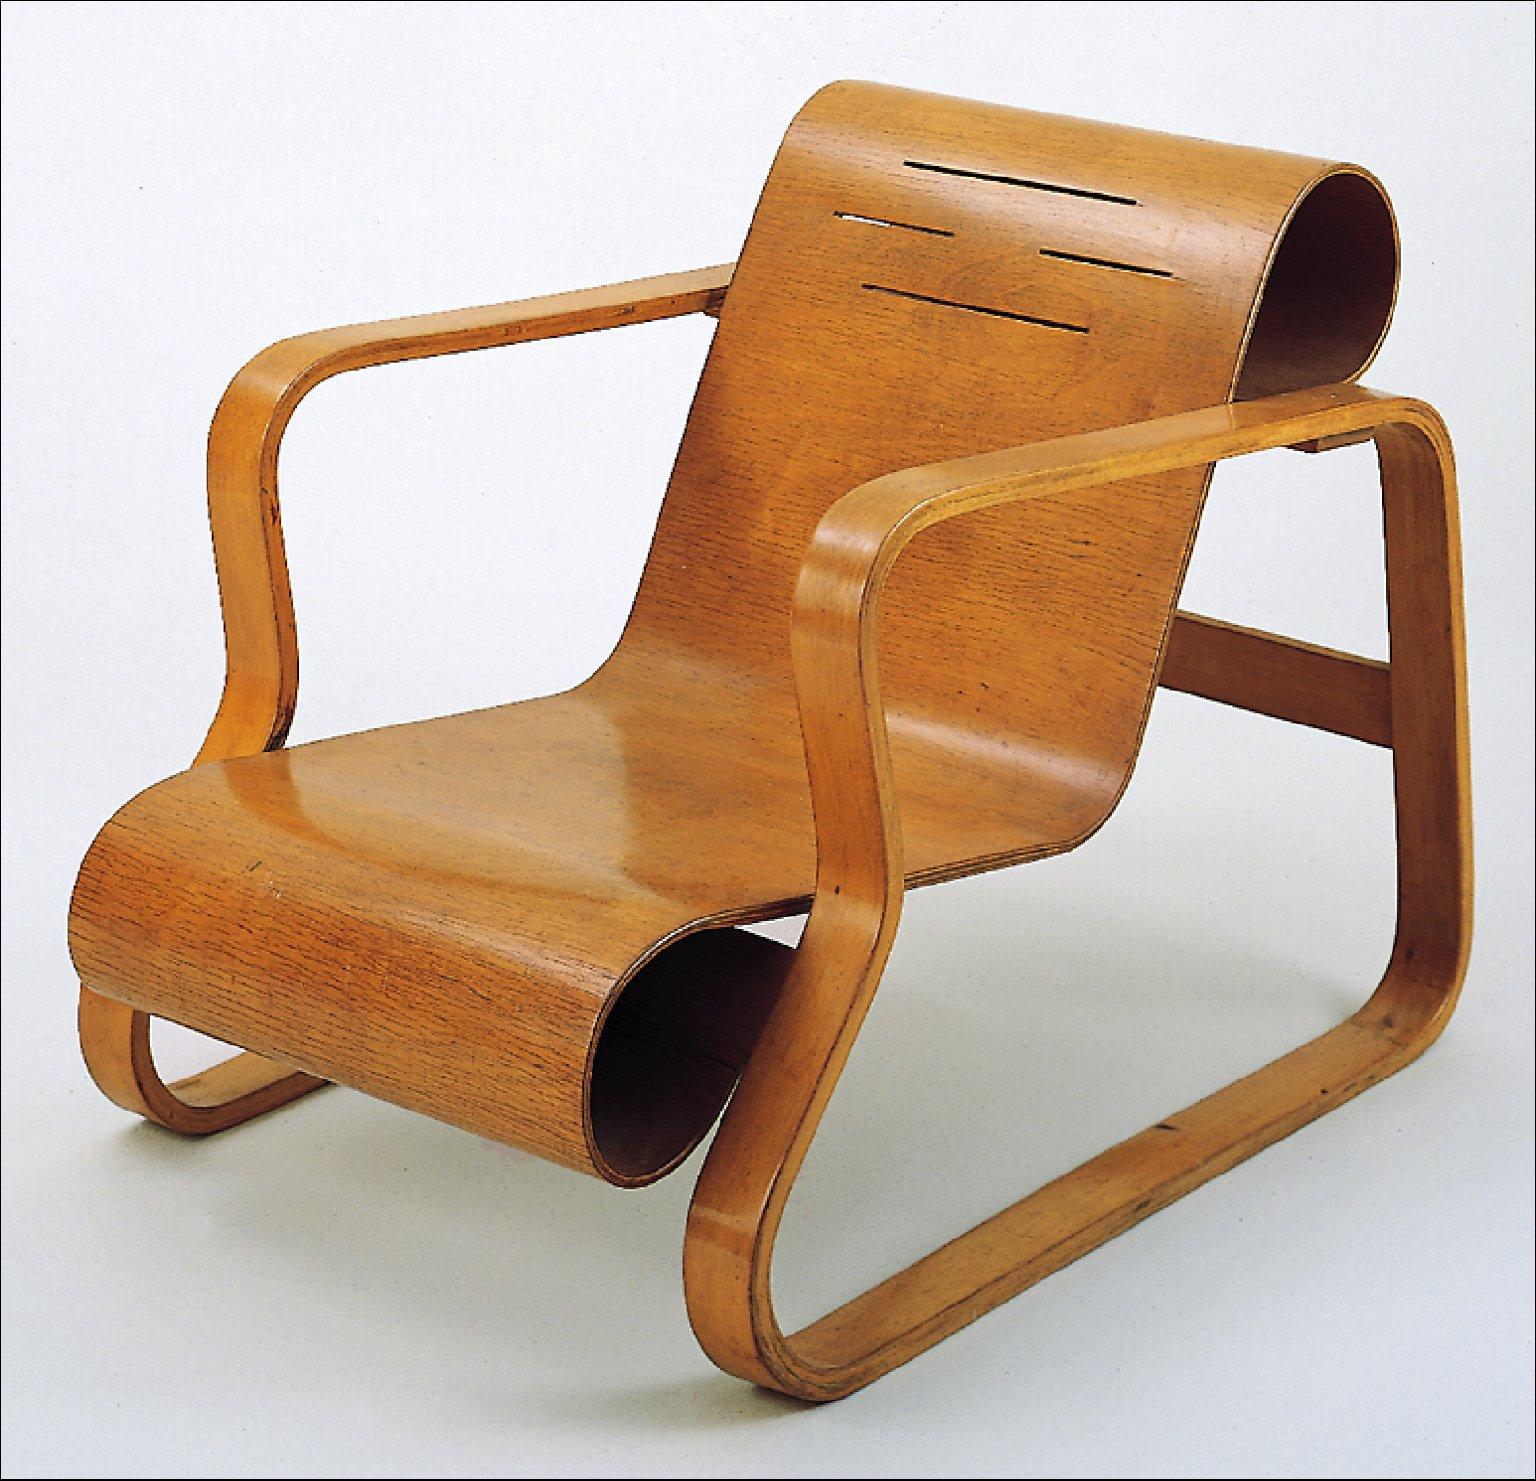 Houten stoelen | stoel van hout | Designstoelen.org